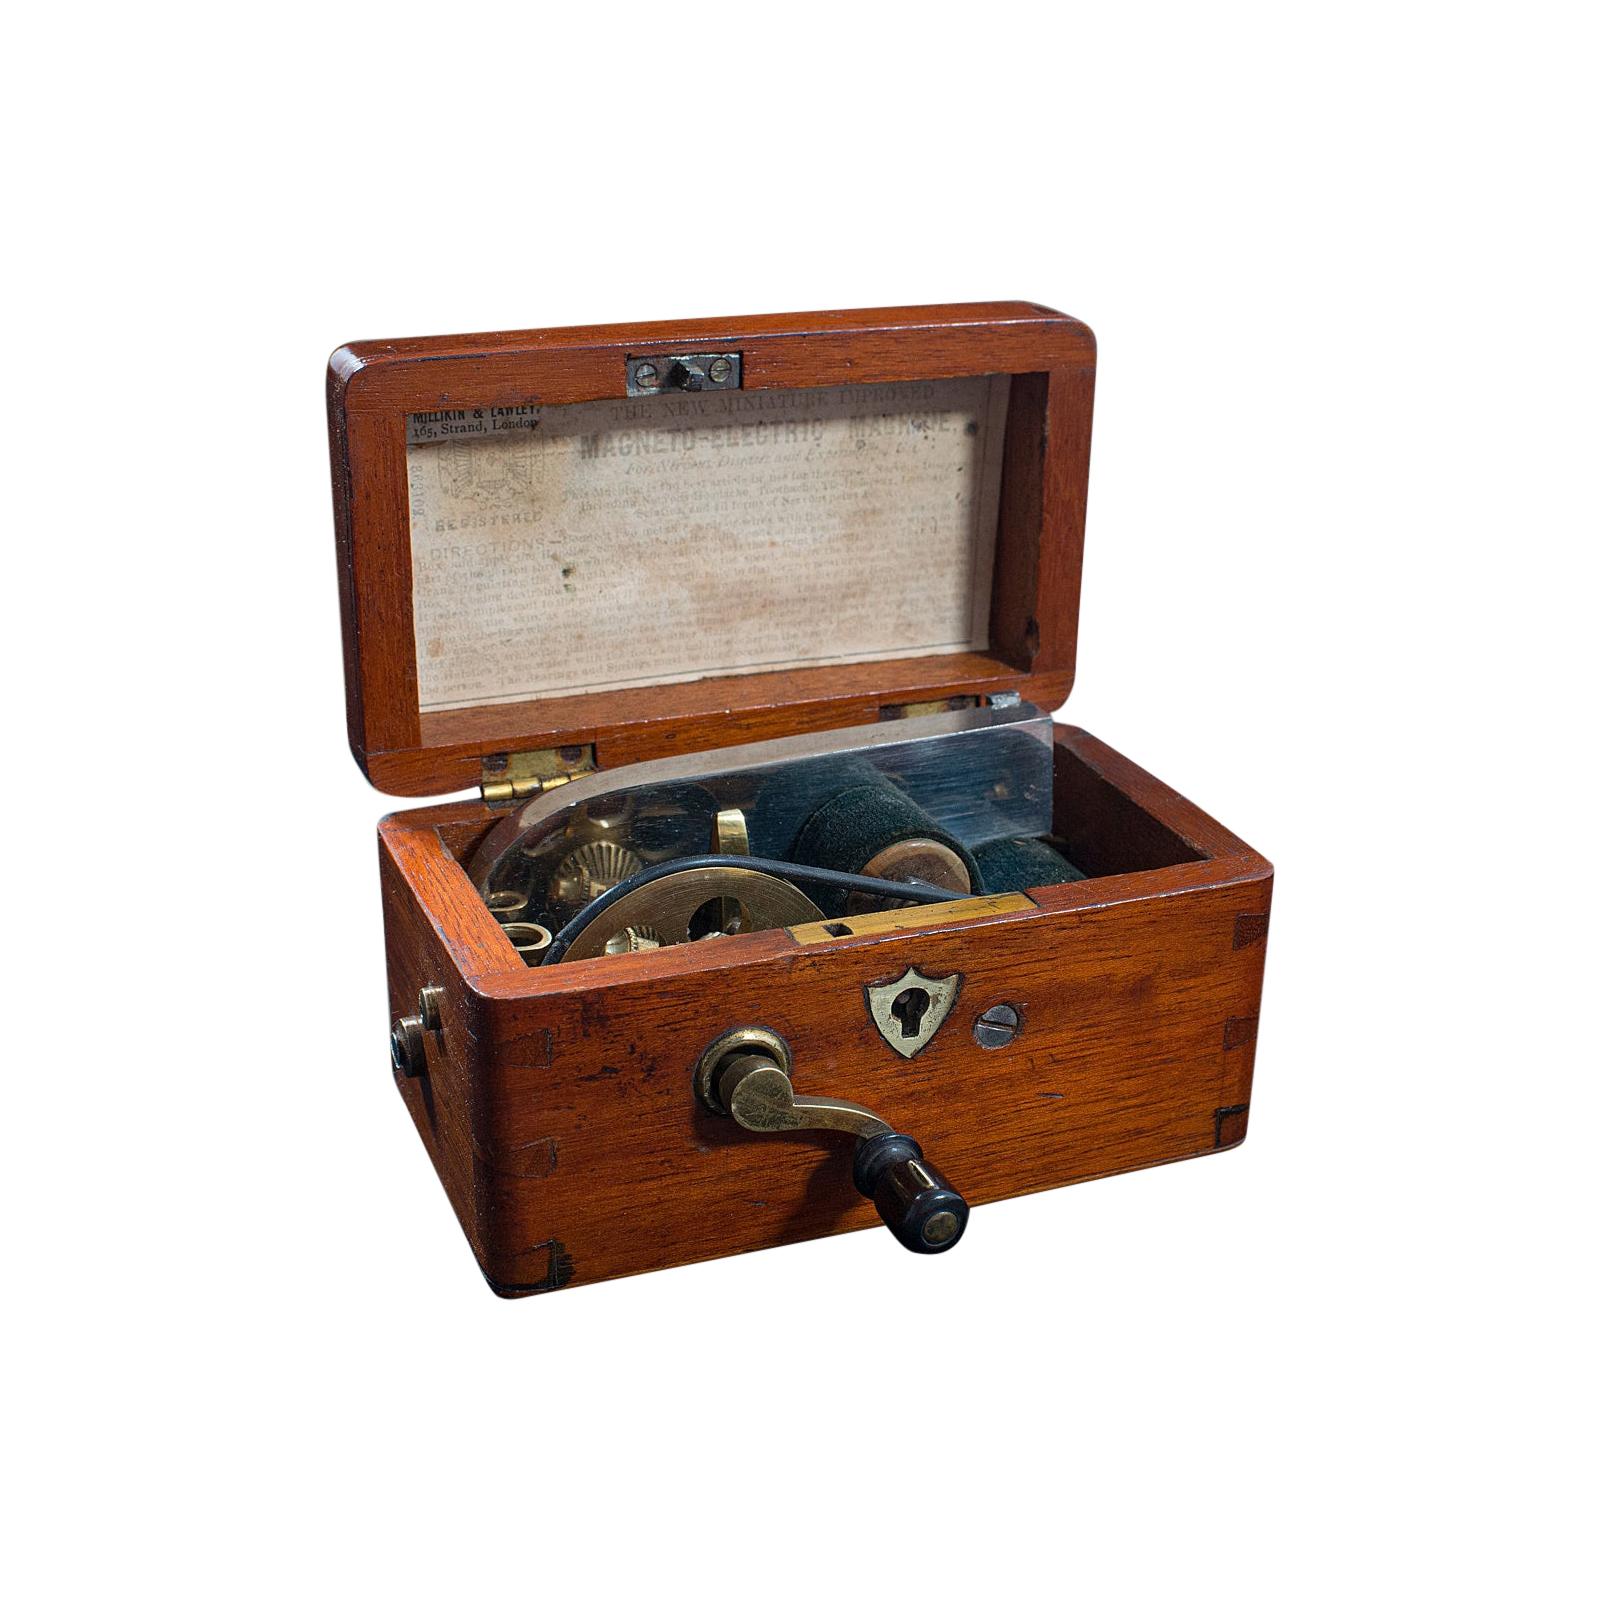 Small Antique Electric Therapy Machine, English, Scientific, Medical, Victorian